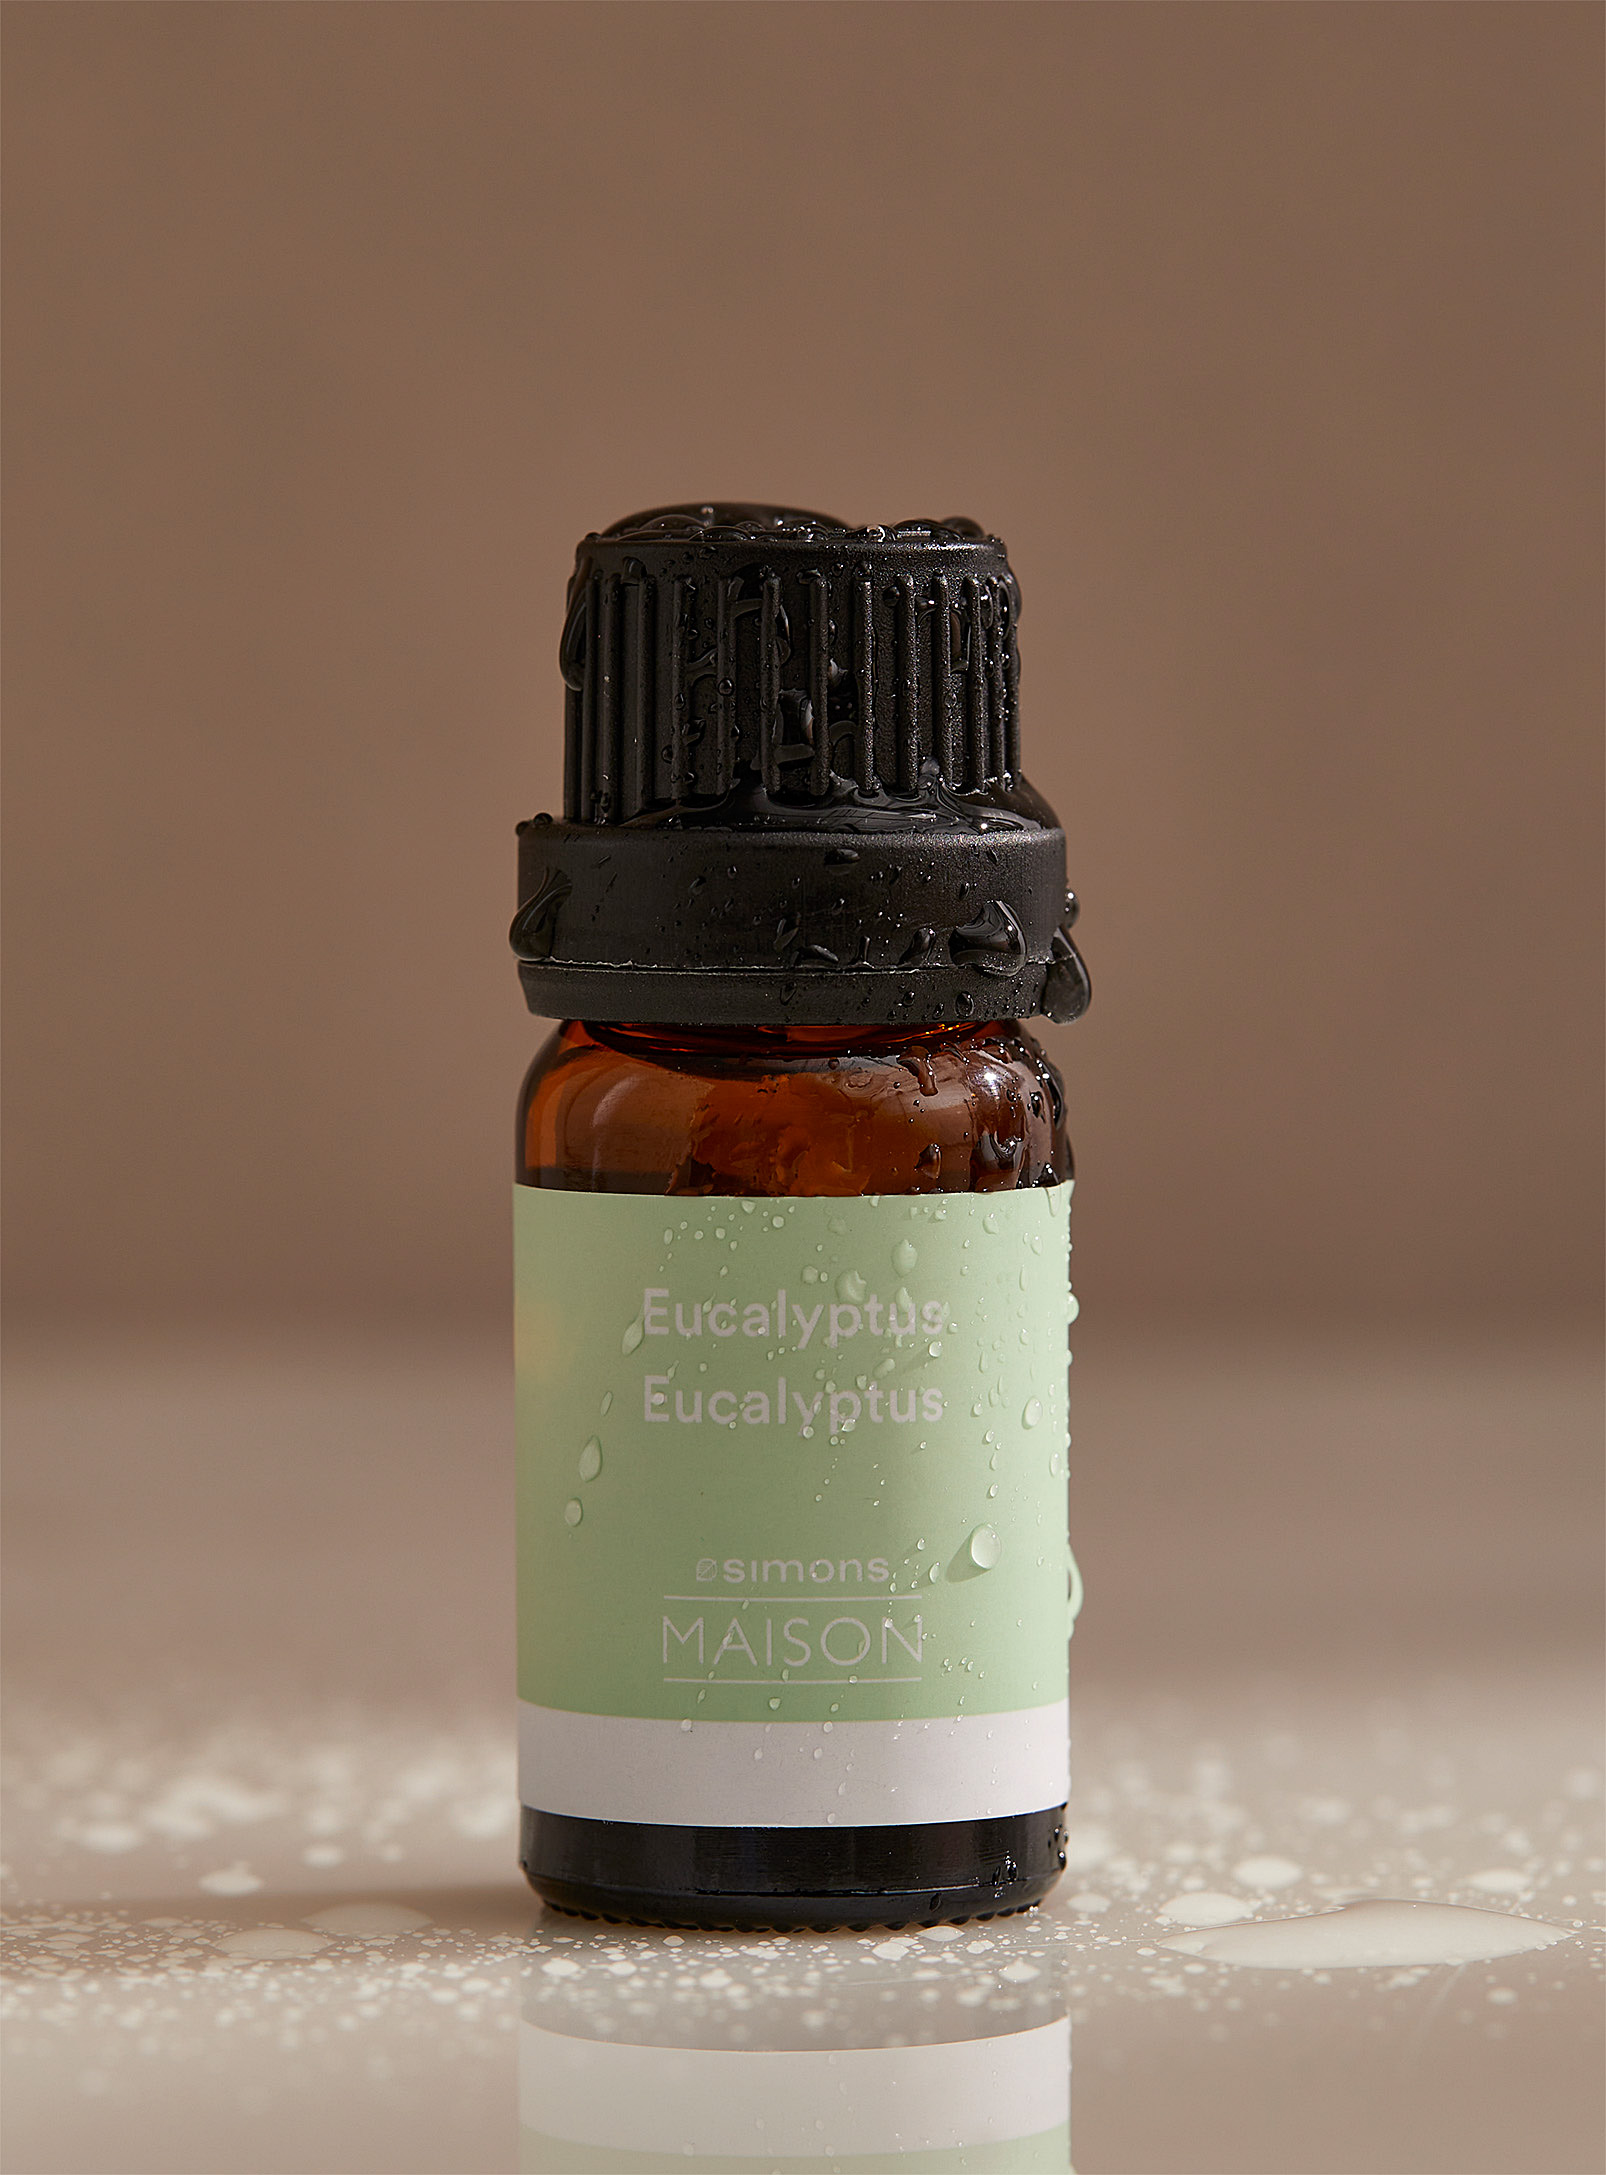 Simons Maison - Eucalyptus essential oil